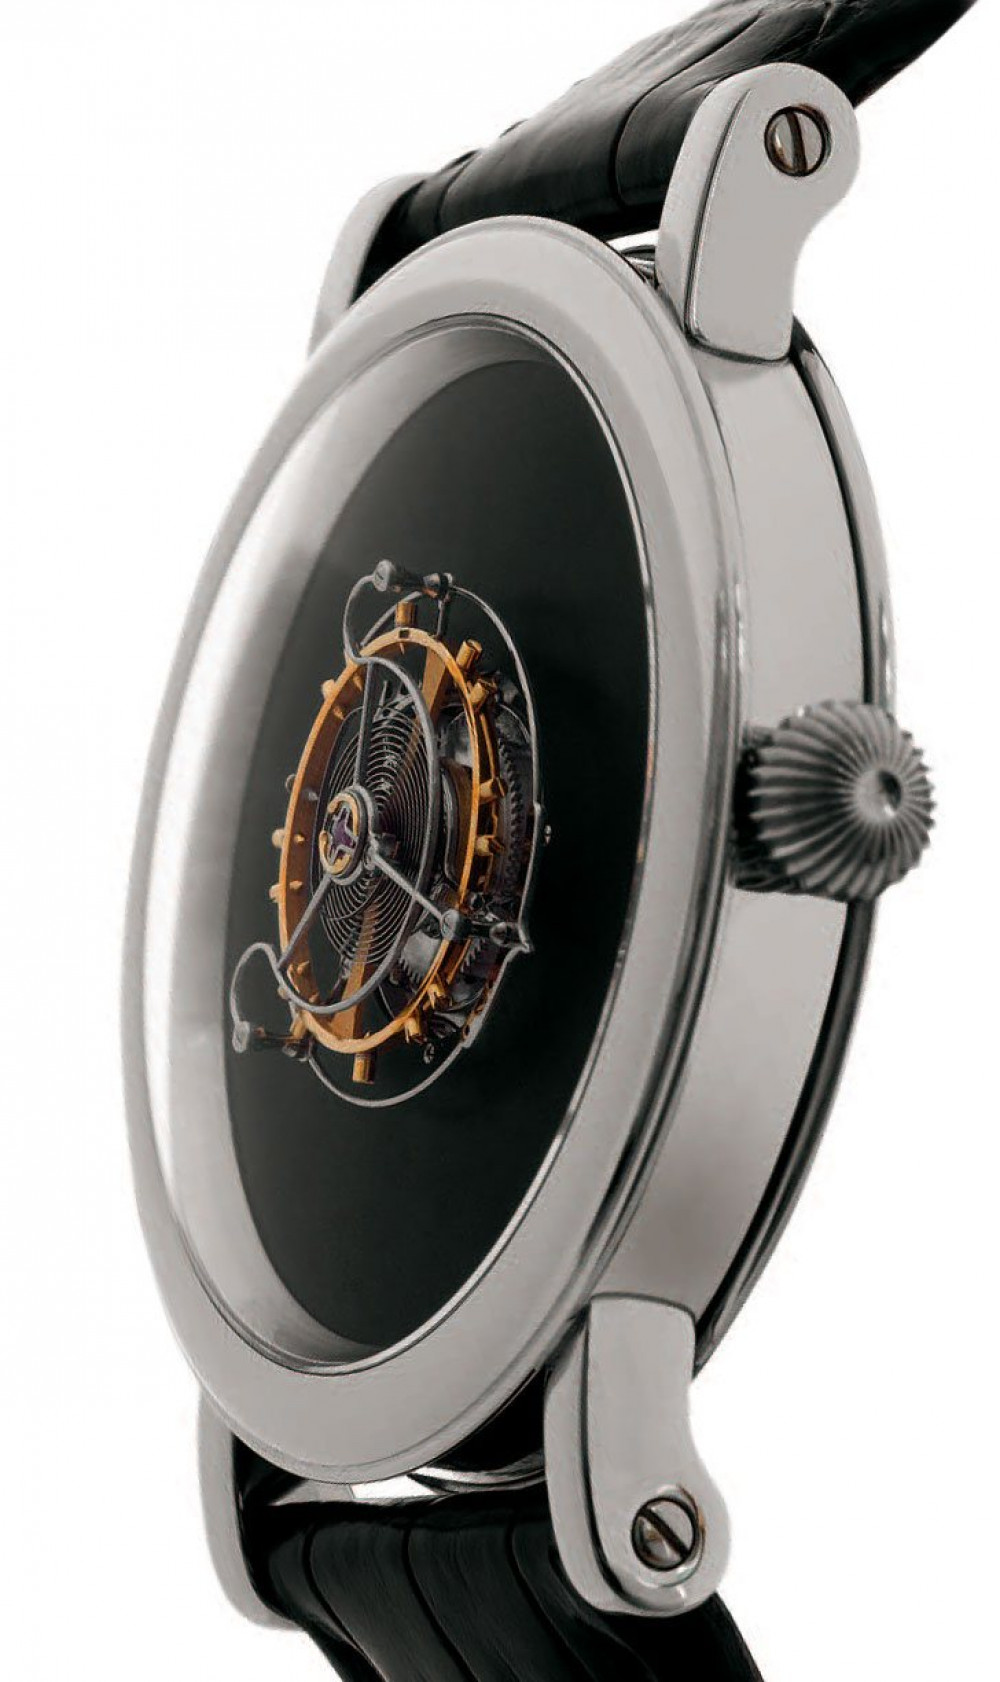 Zegarek firmy Haldimann Horology, model H8 Sculptura Tourbillon